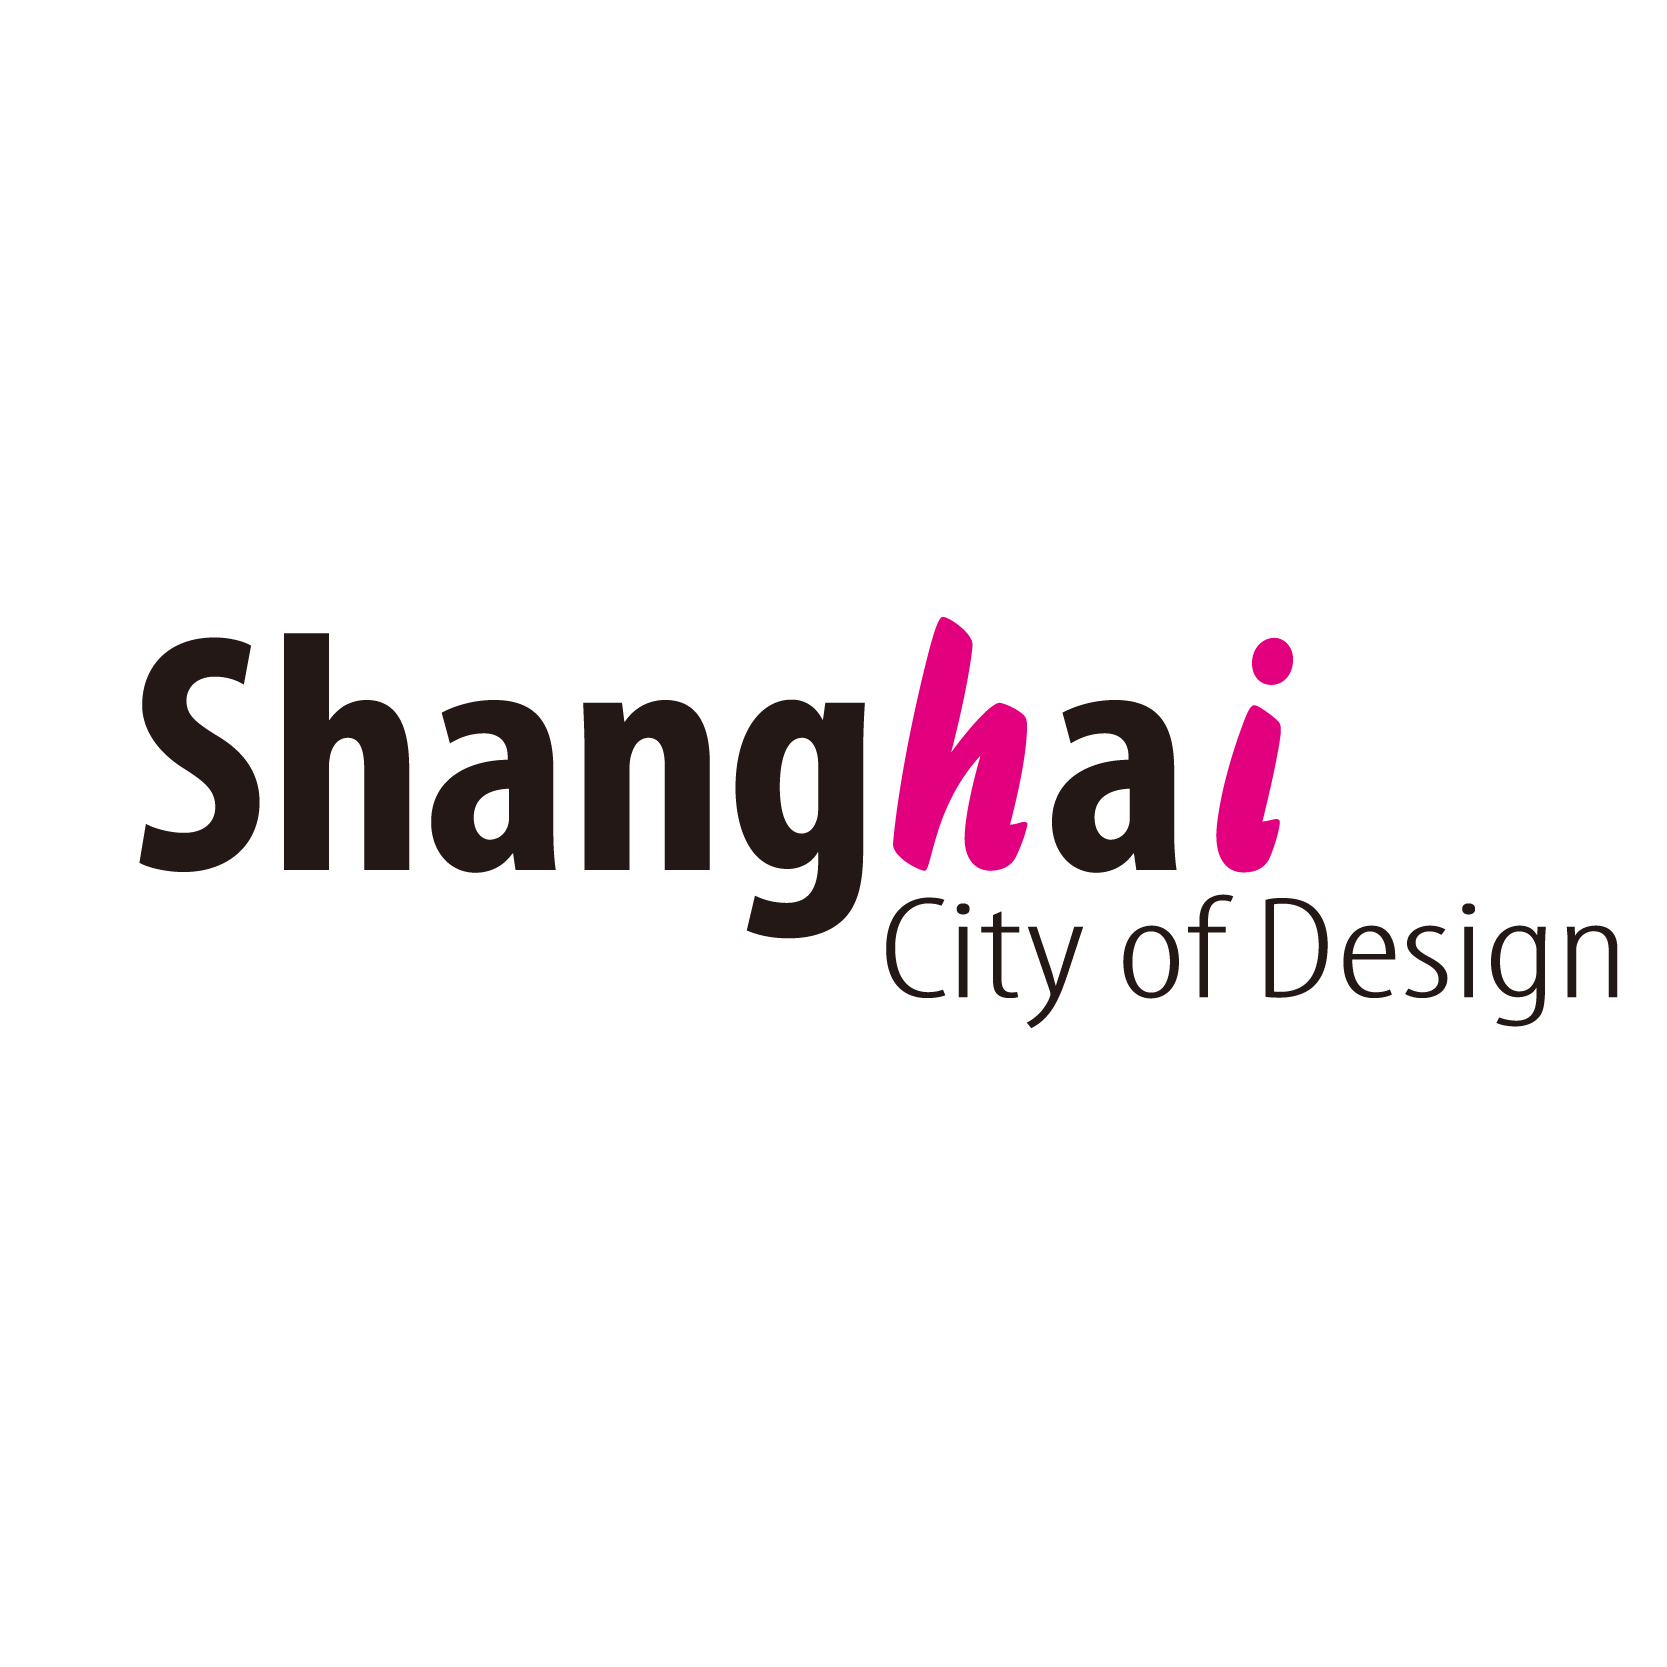 Shanghai, City of Design